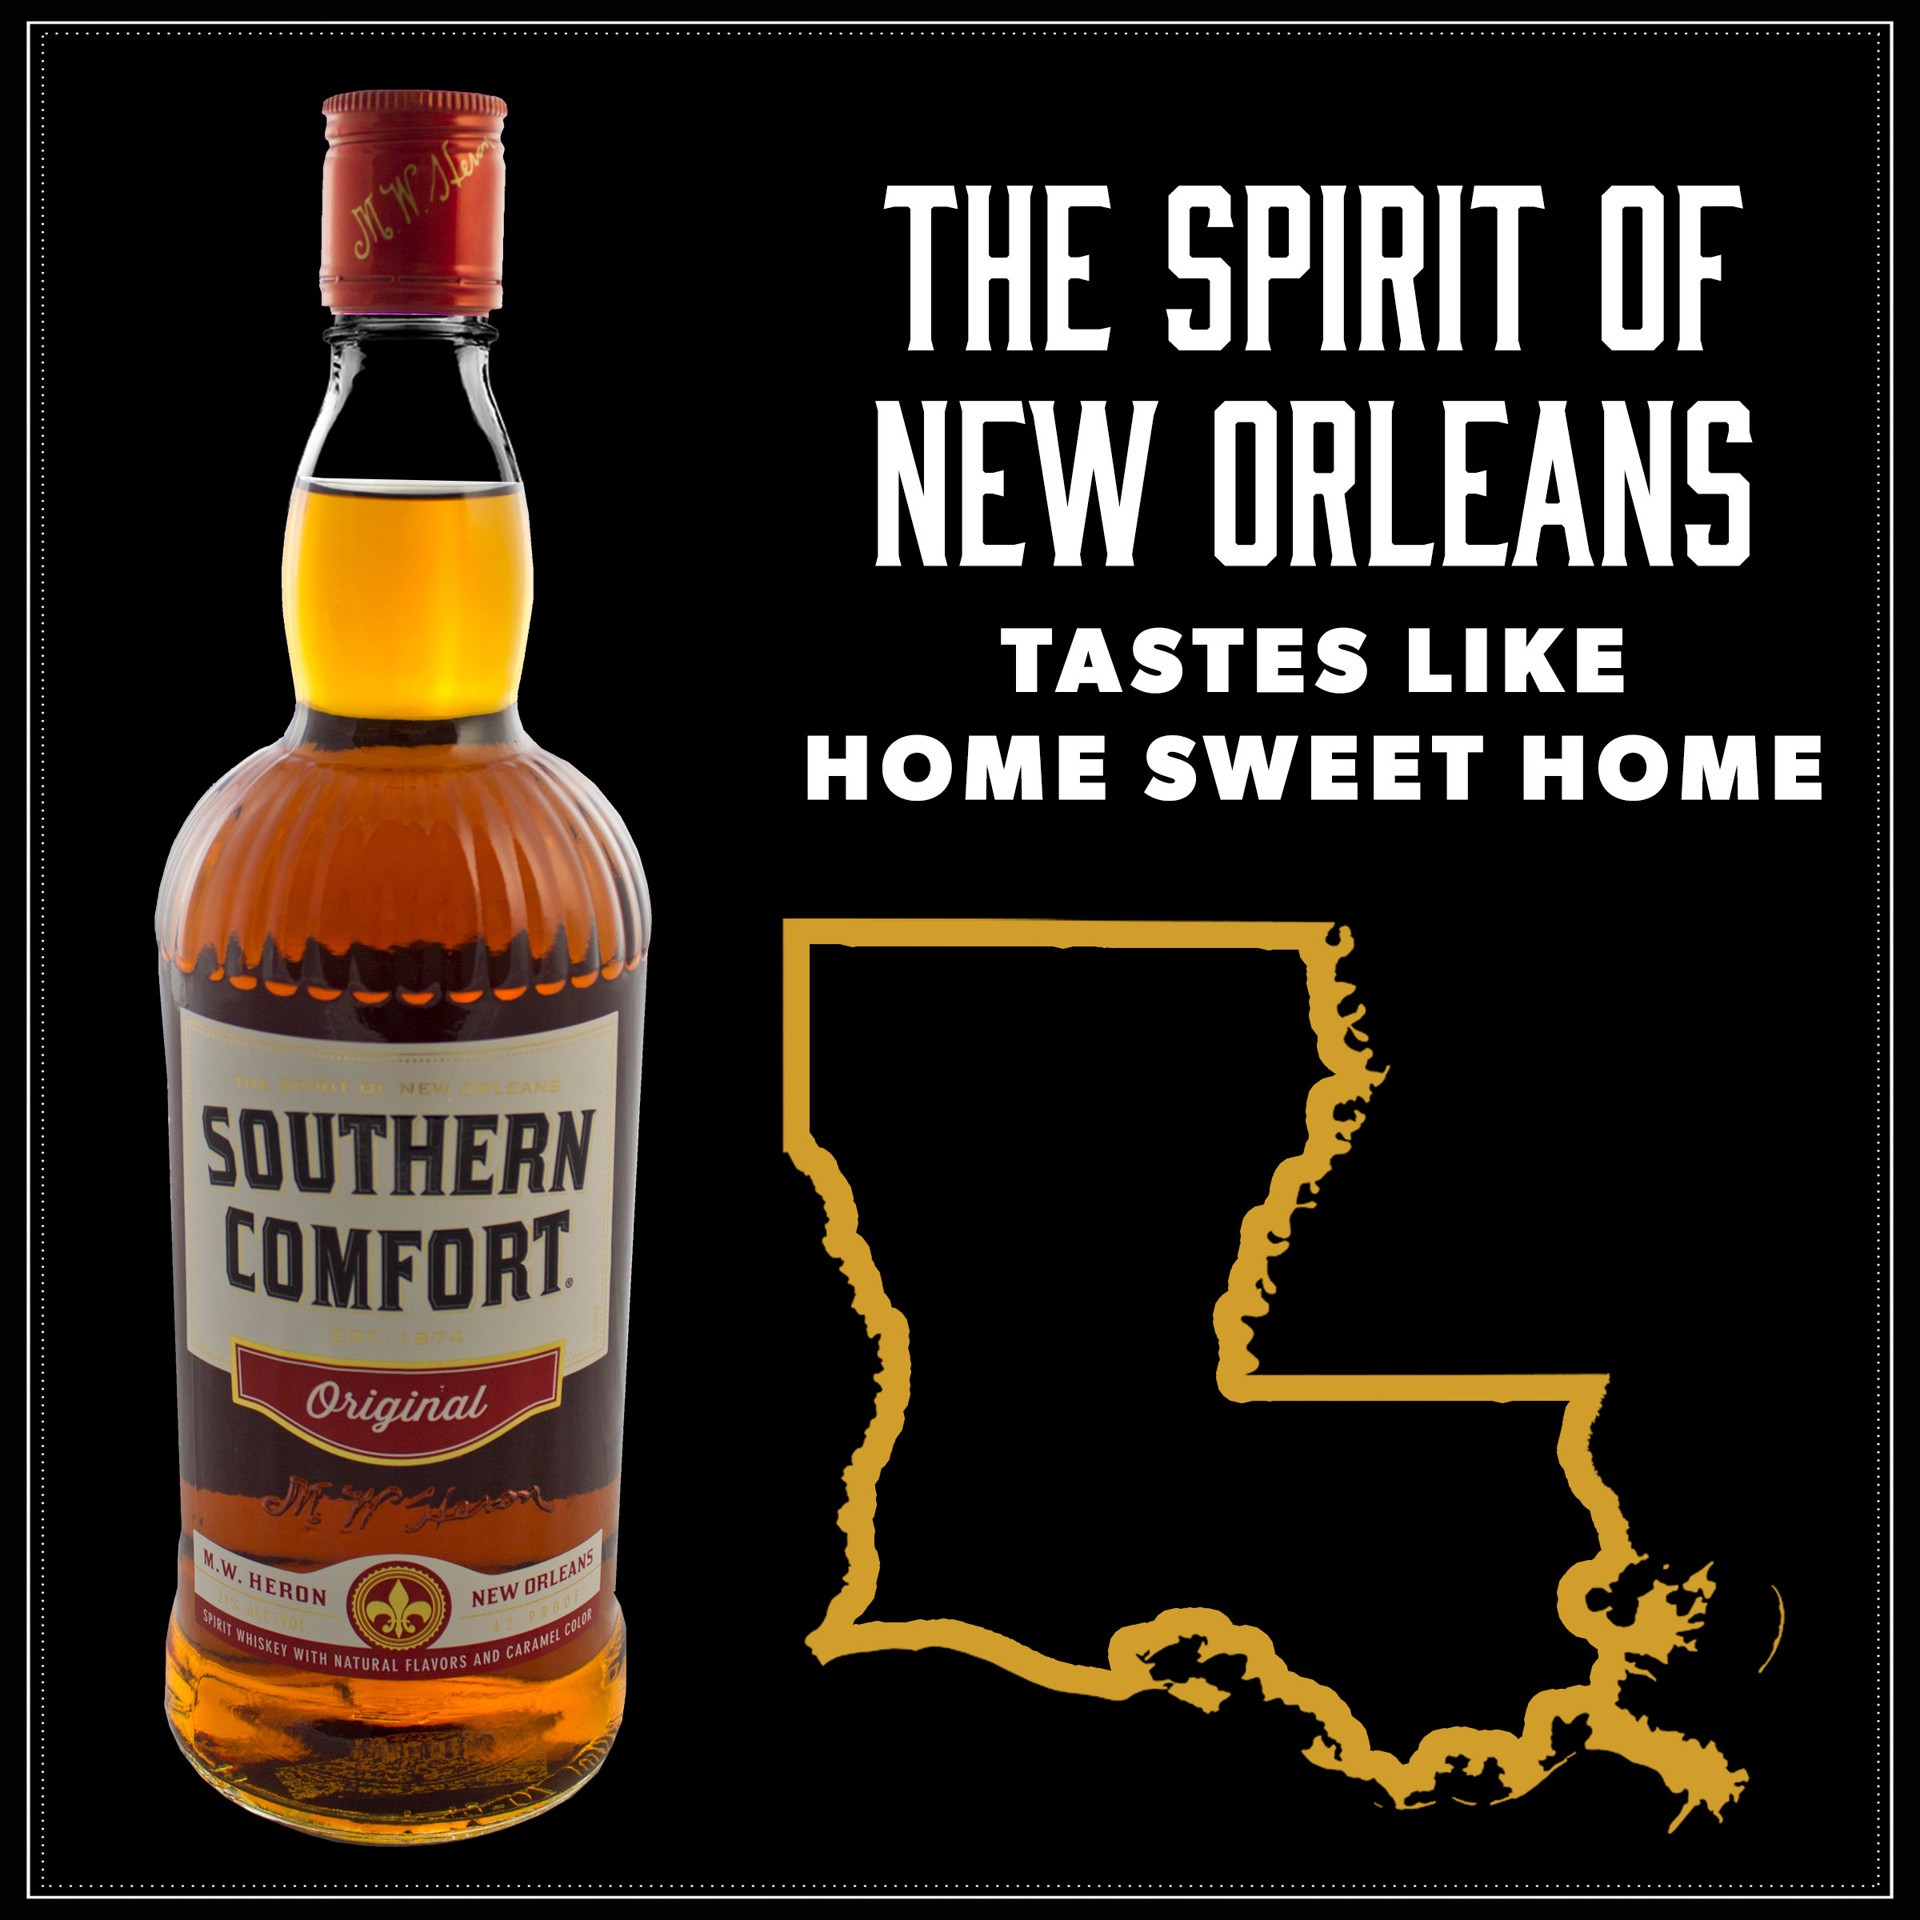 Southern Comfort Original Whiskey - 750ml Bottle : Target